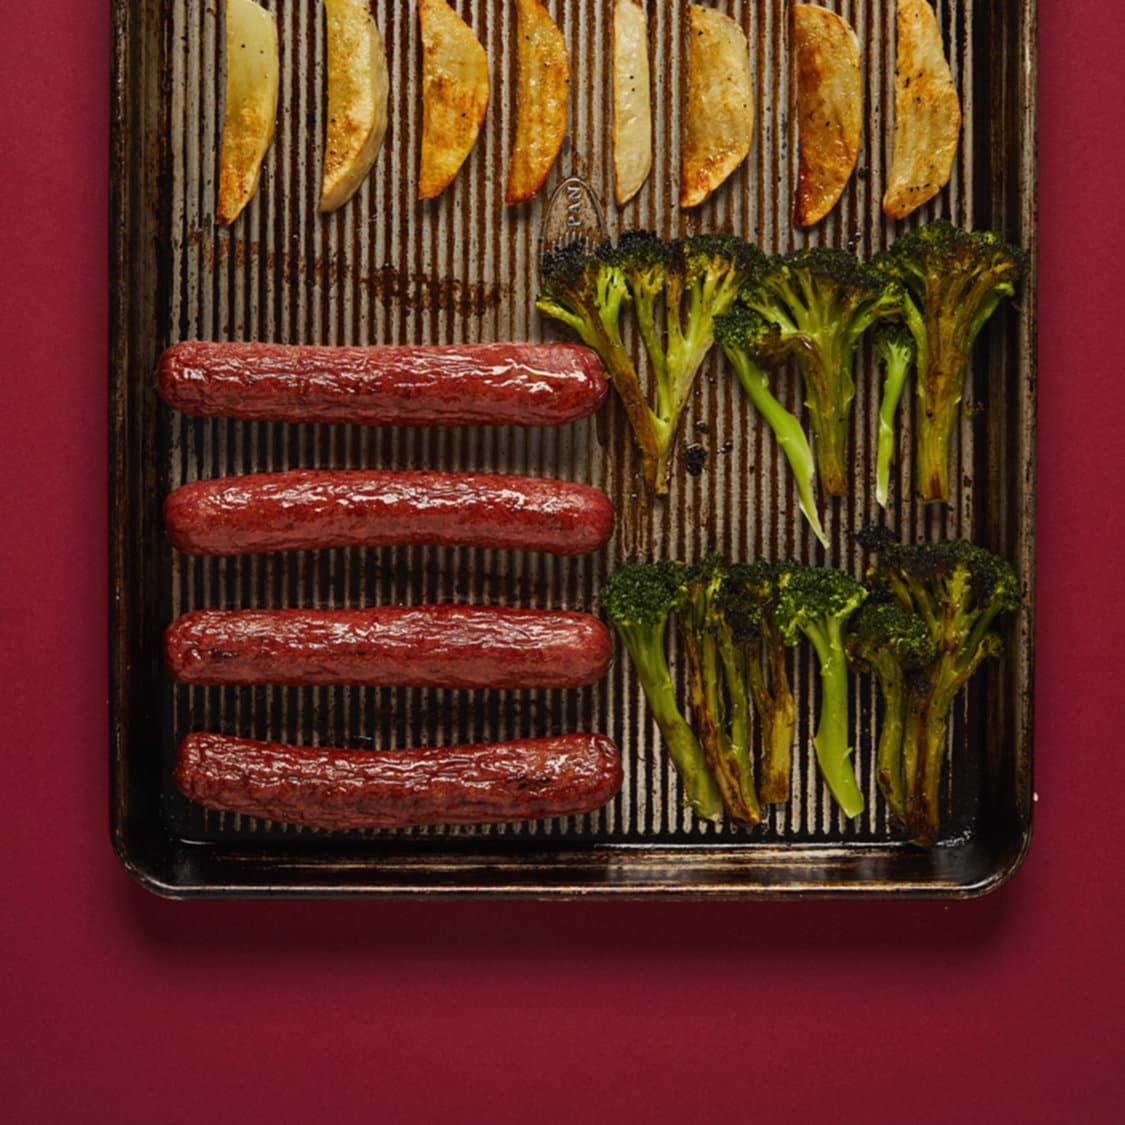 https://fleishigs.com/images/mobile-app/recipes/669-list-smoky-sheet-pan-sausage-broccoli-and-potatoes.jpg